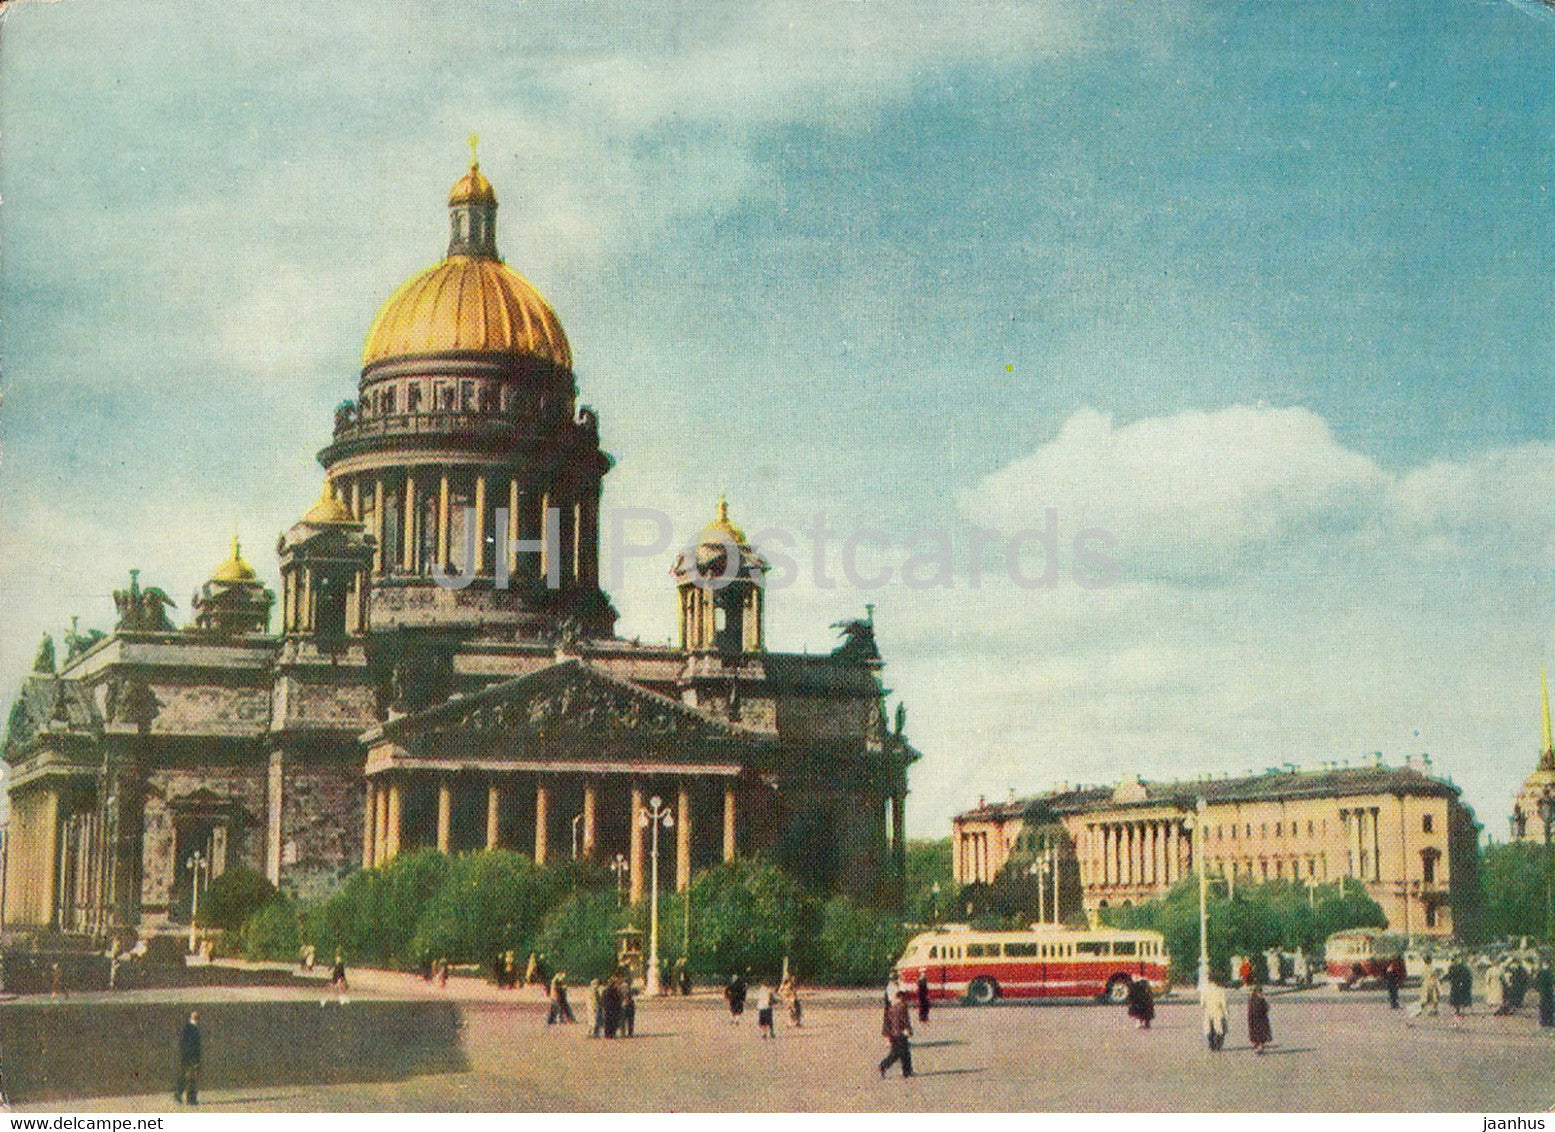 Leningrad - St Petersburg - St Isaac's Square - museum - bus - 1962 - Russia USSR - unused - JH Postcards